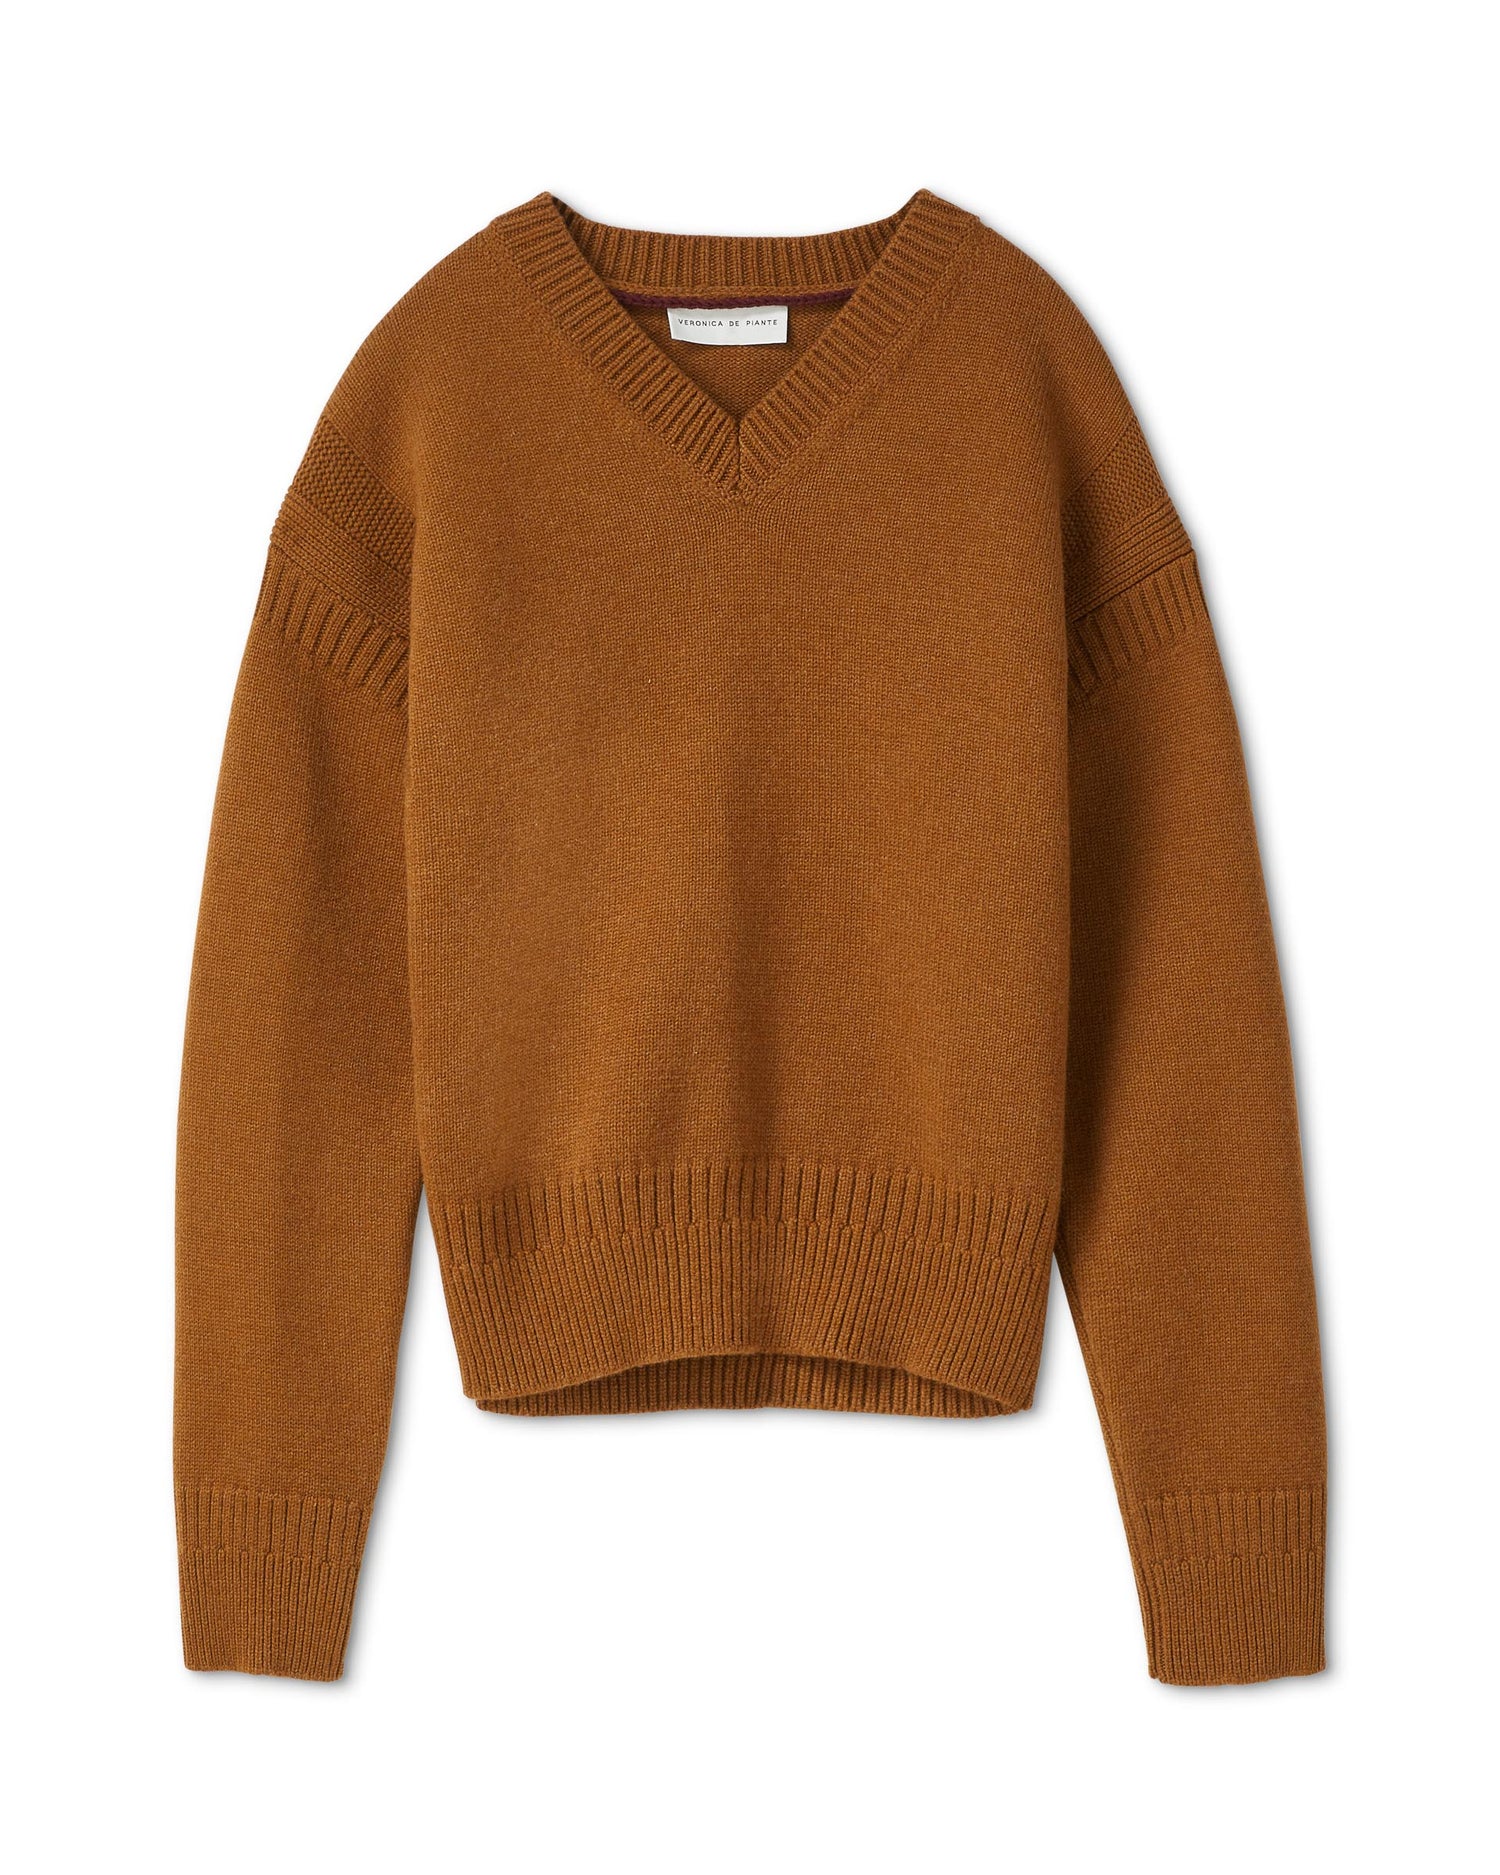 Poppy Sweater in Wool Cashmere, Cinnamon